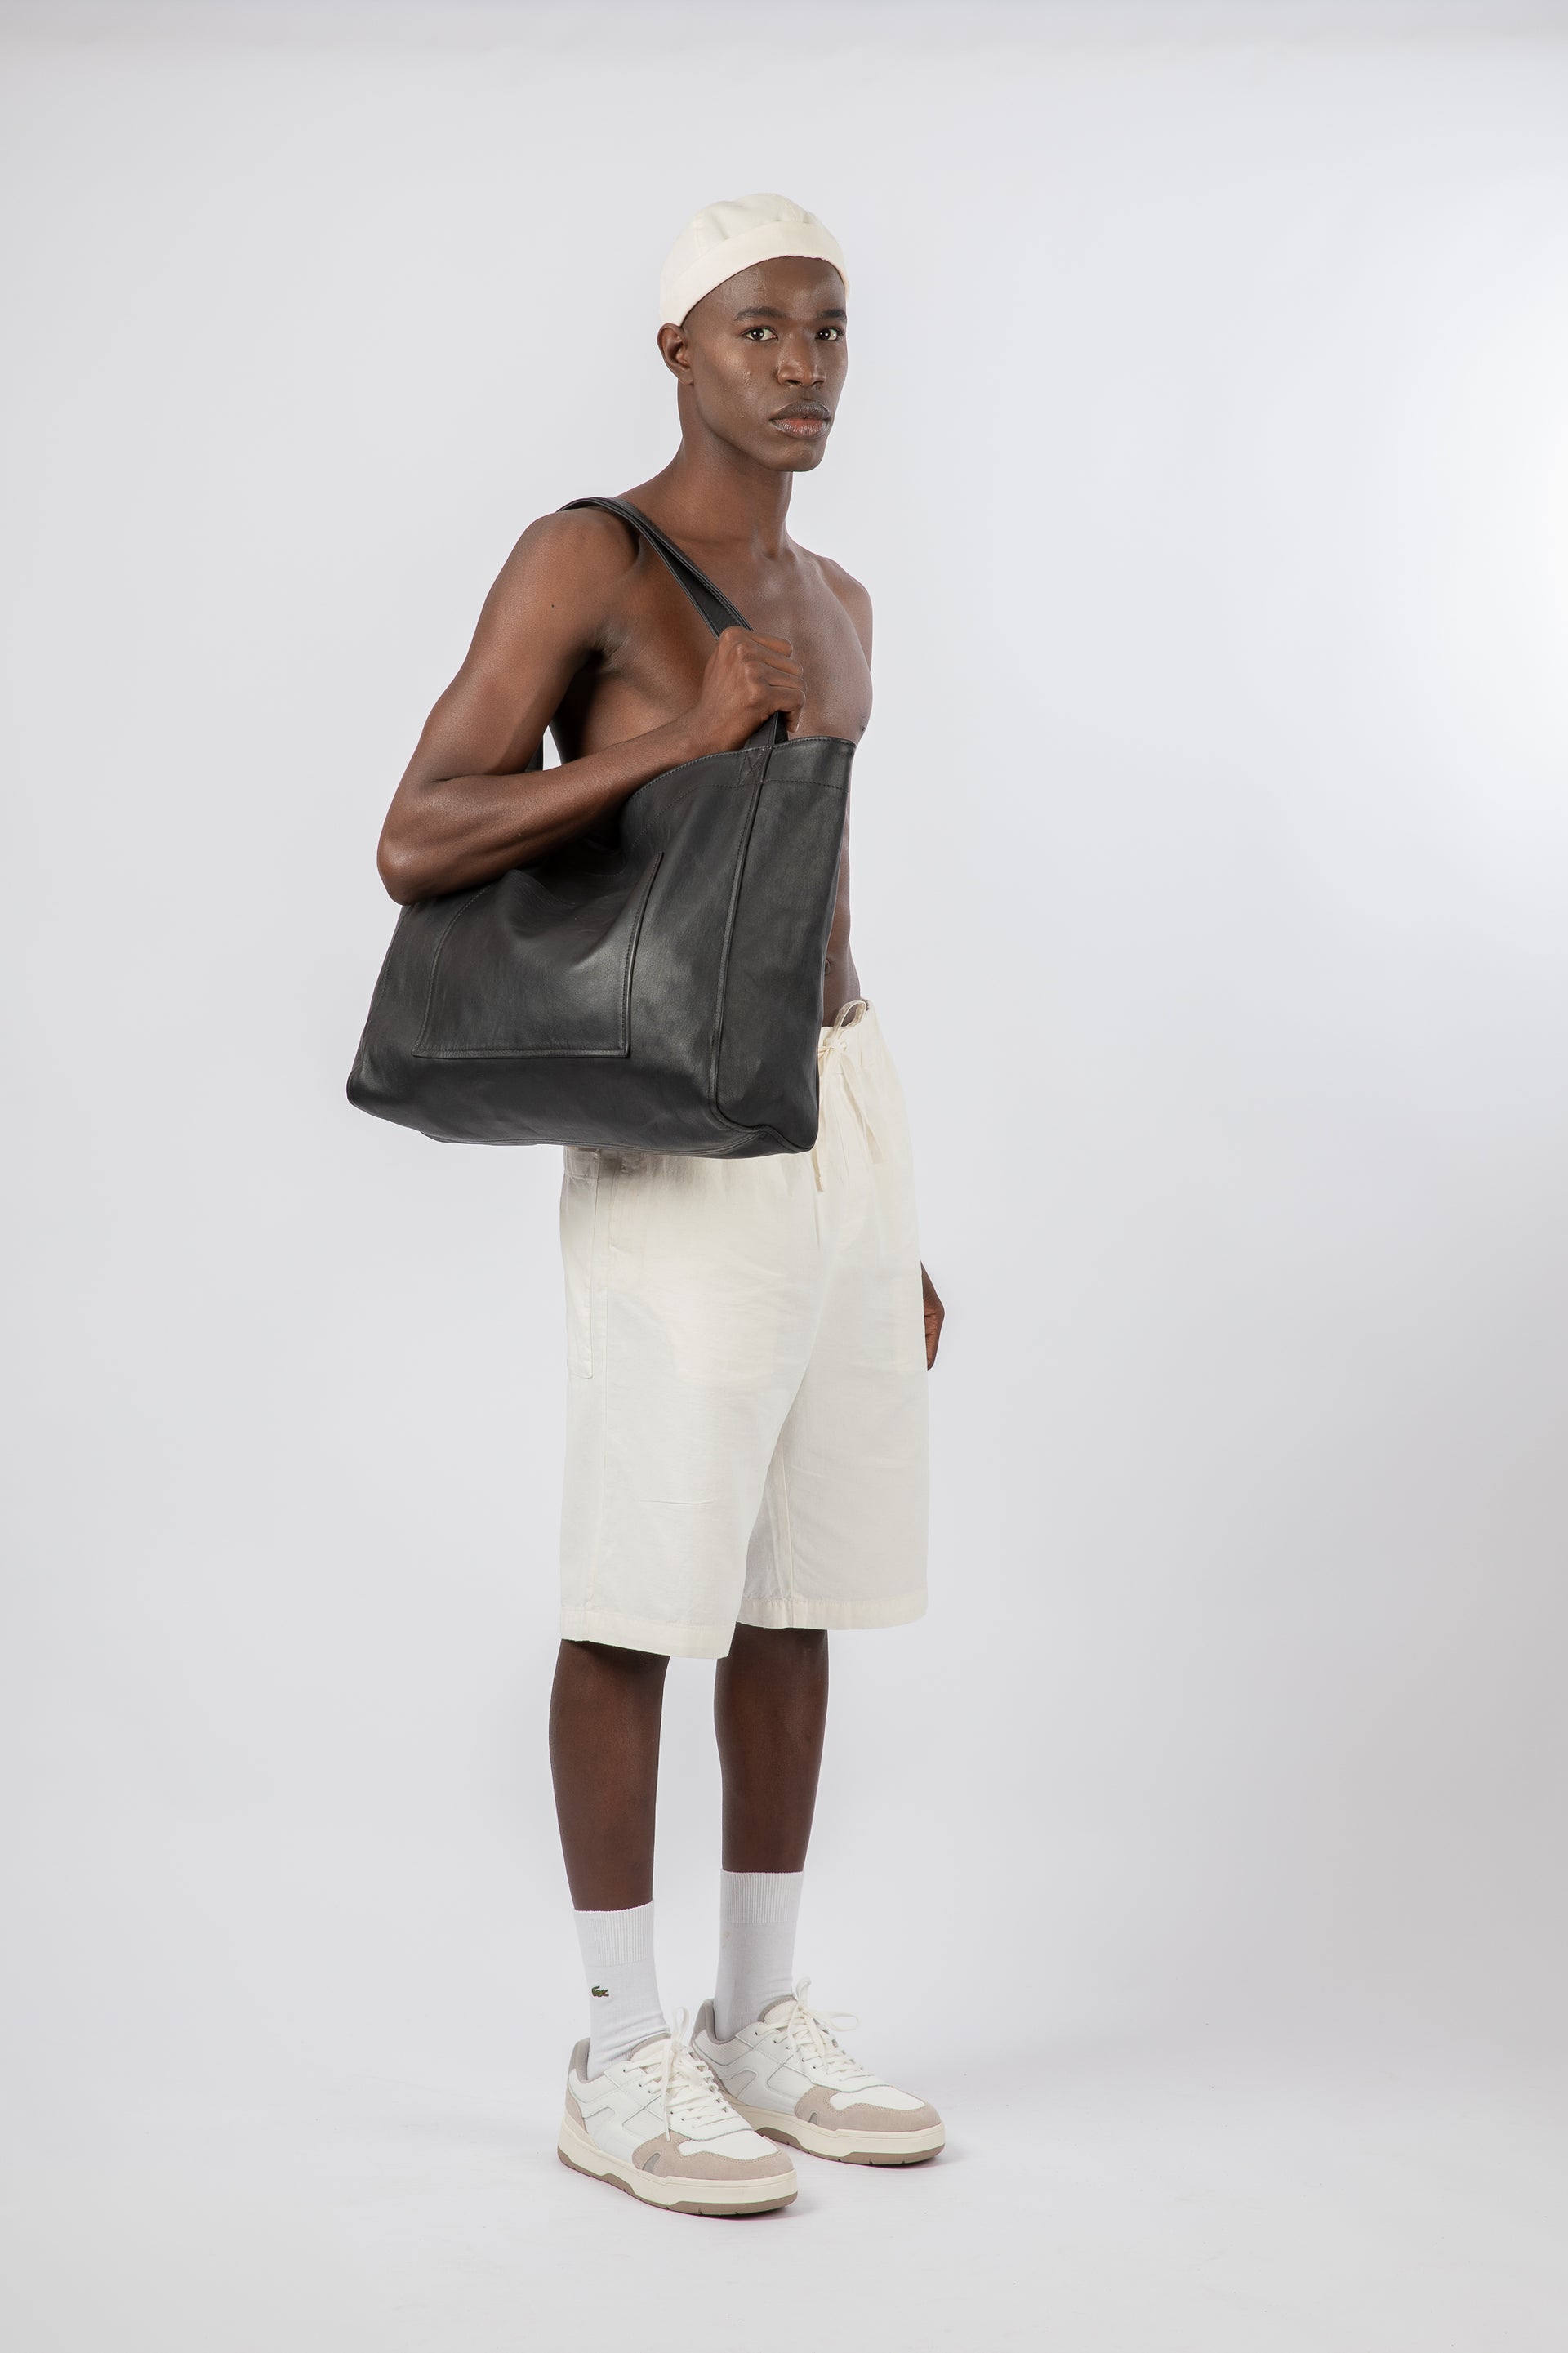 Buy Hobo Bag Leather Black Leather Purse Soft Leather Handbag